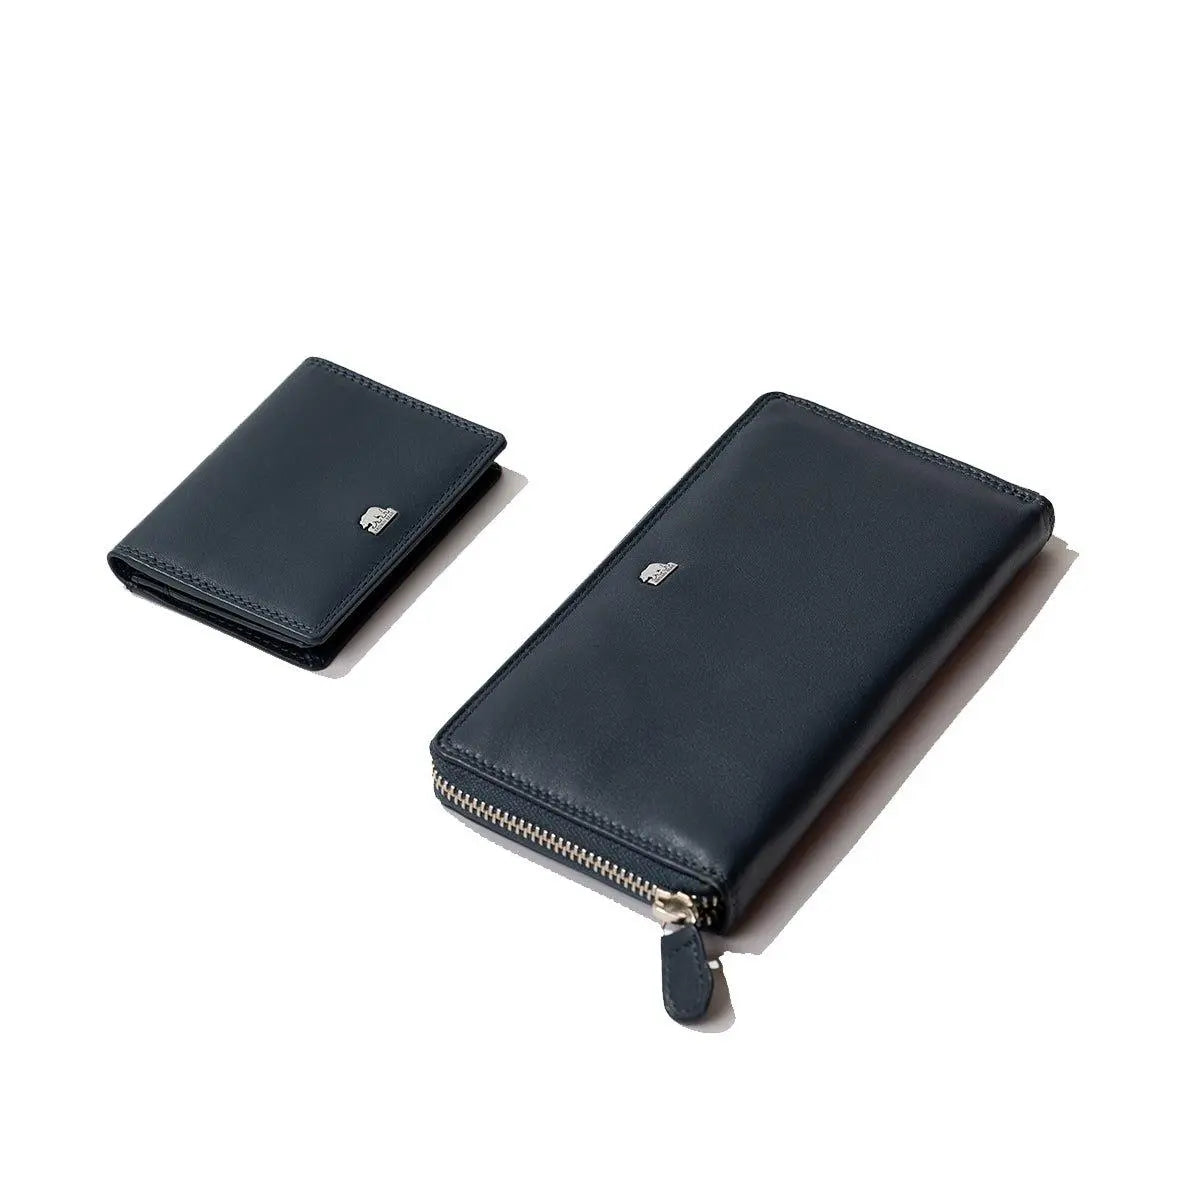 Gift Set - Sleek and Secure: Men's Wallet and Card Holder Gift Set – Brown  Bear